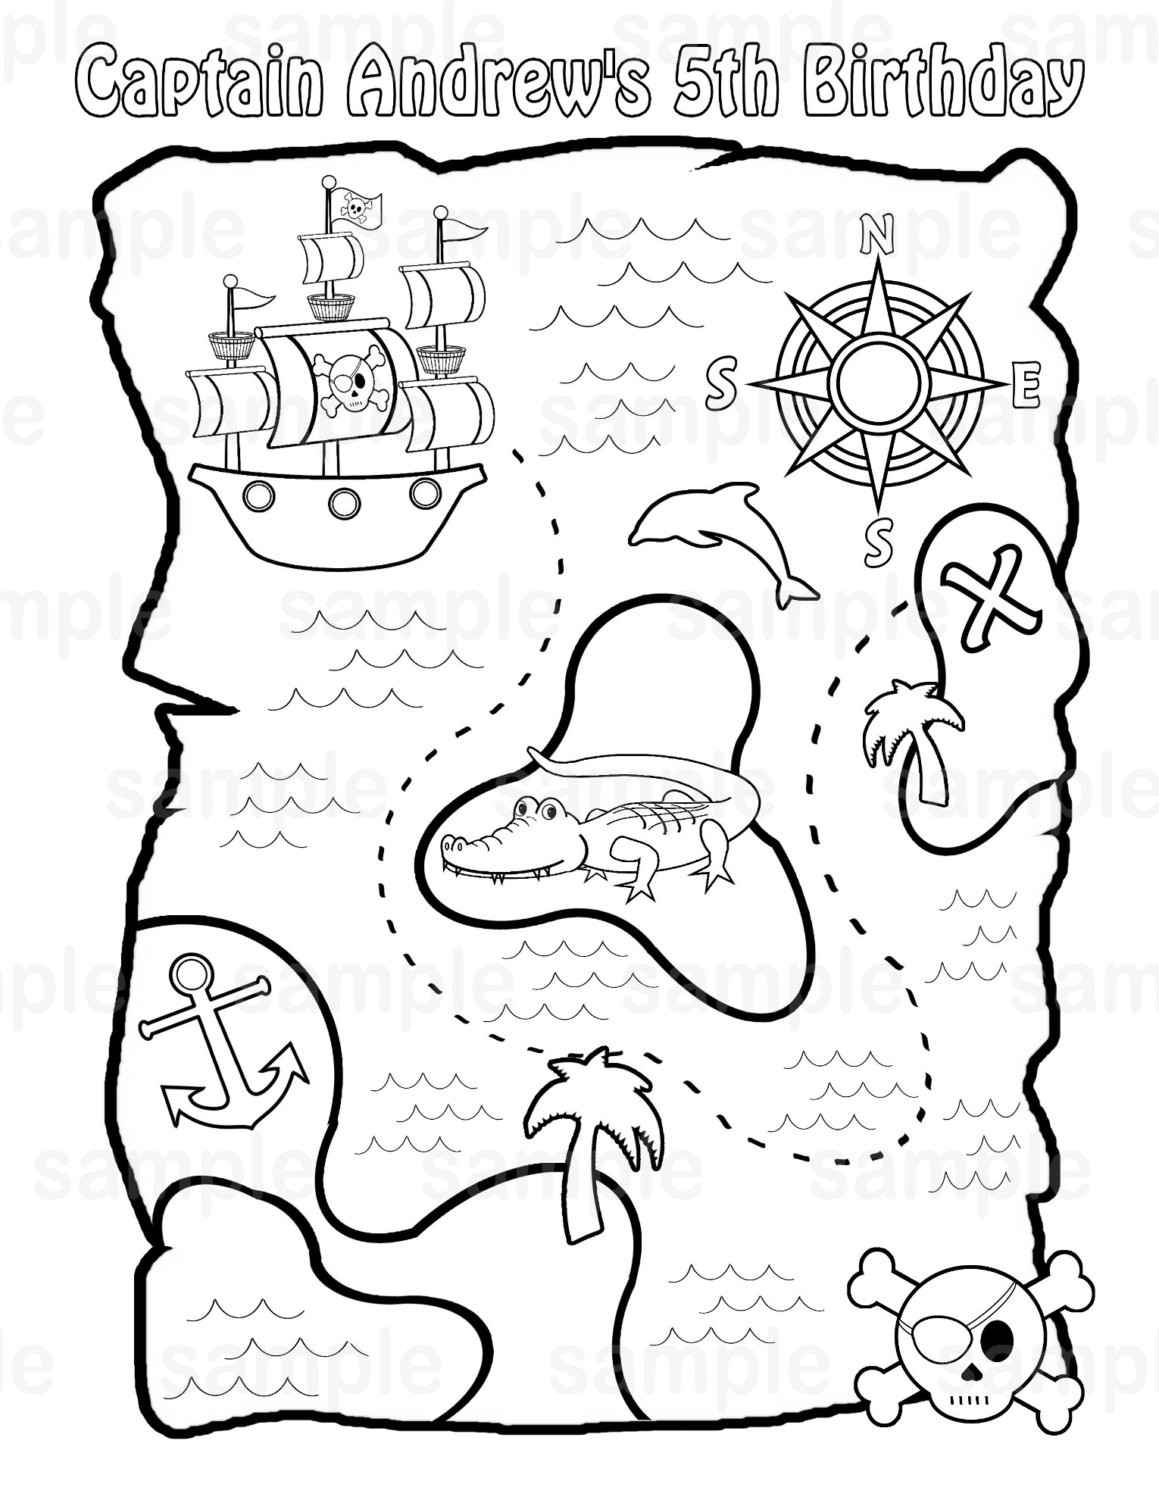 Treasure Map Coloring Page at GetDrawings Free download